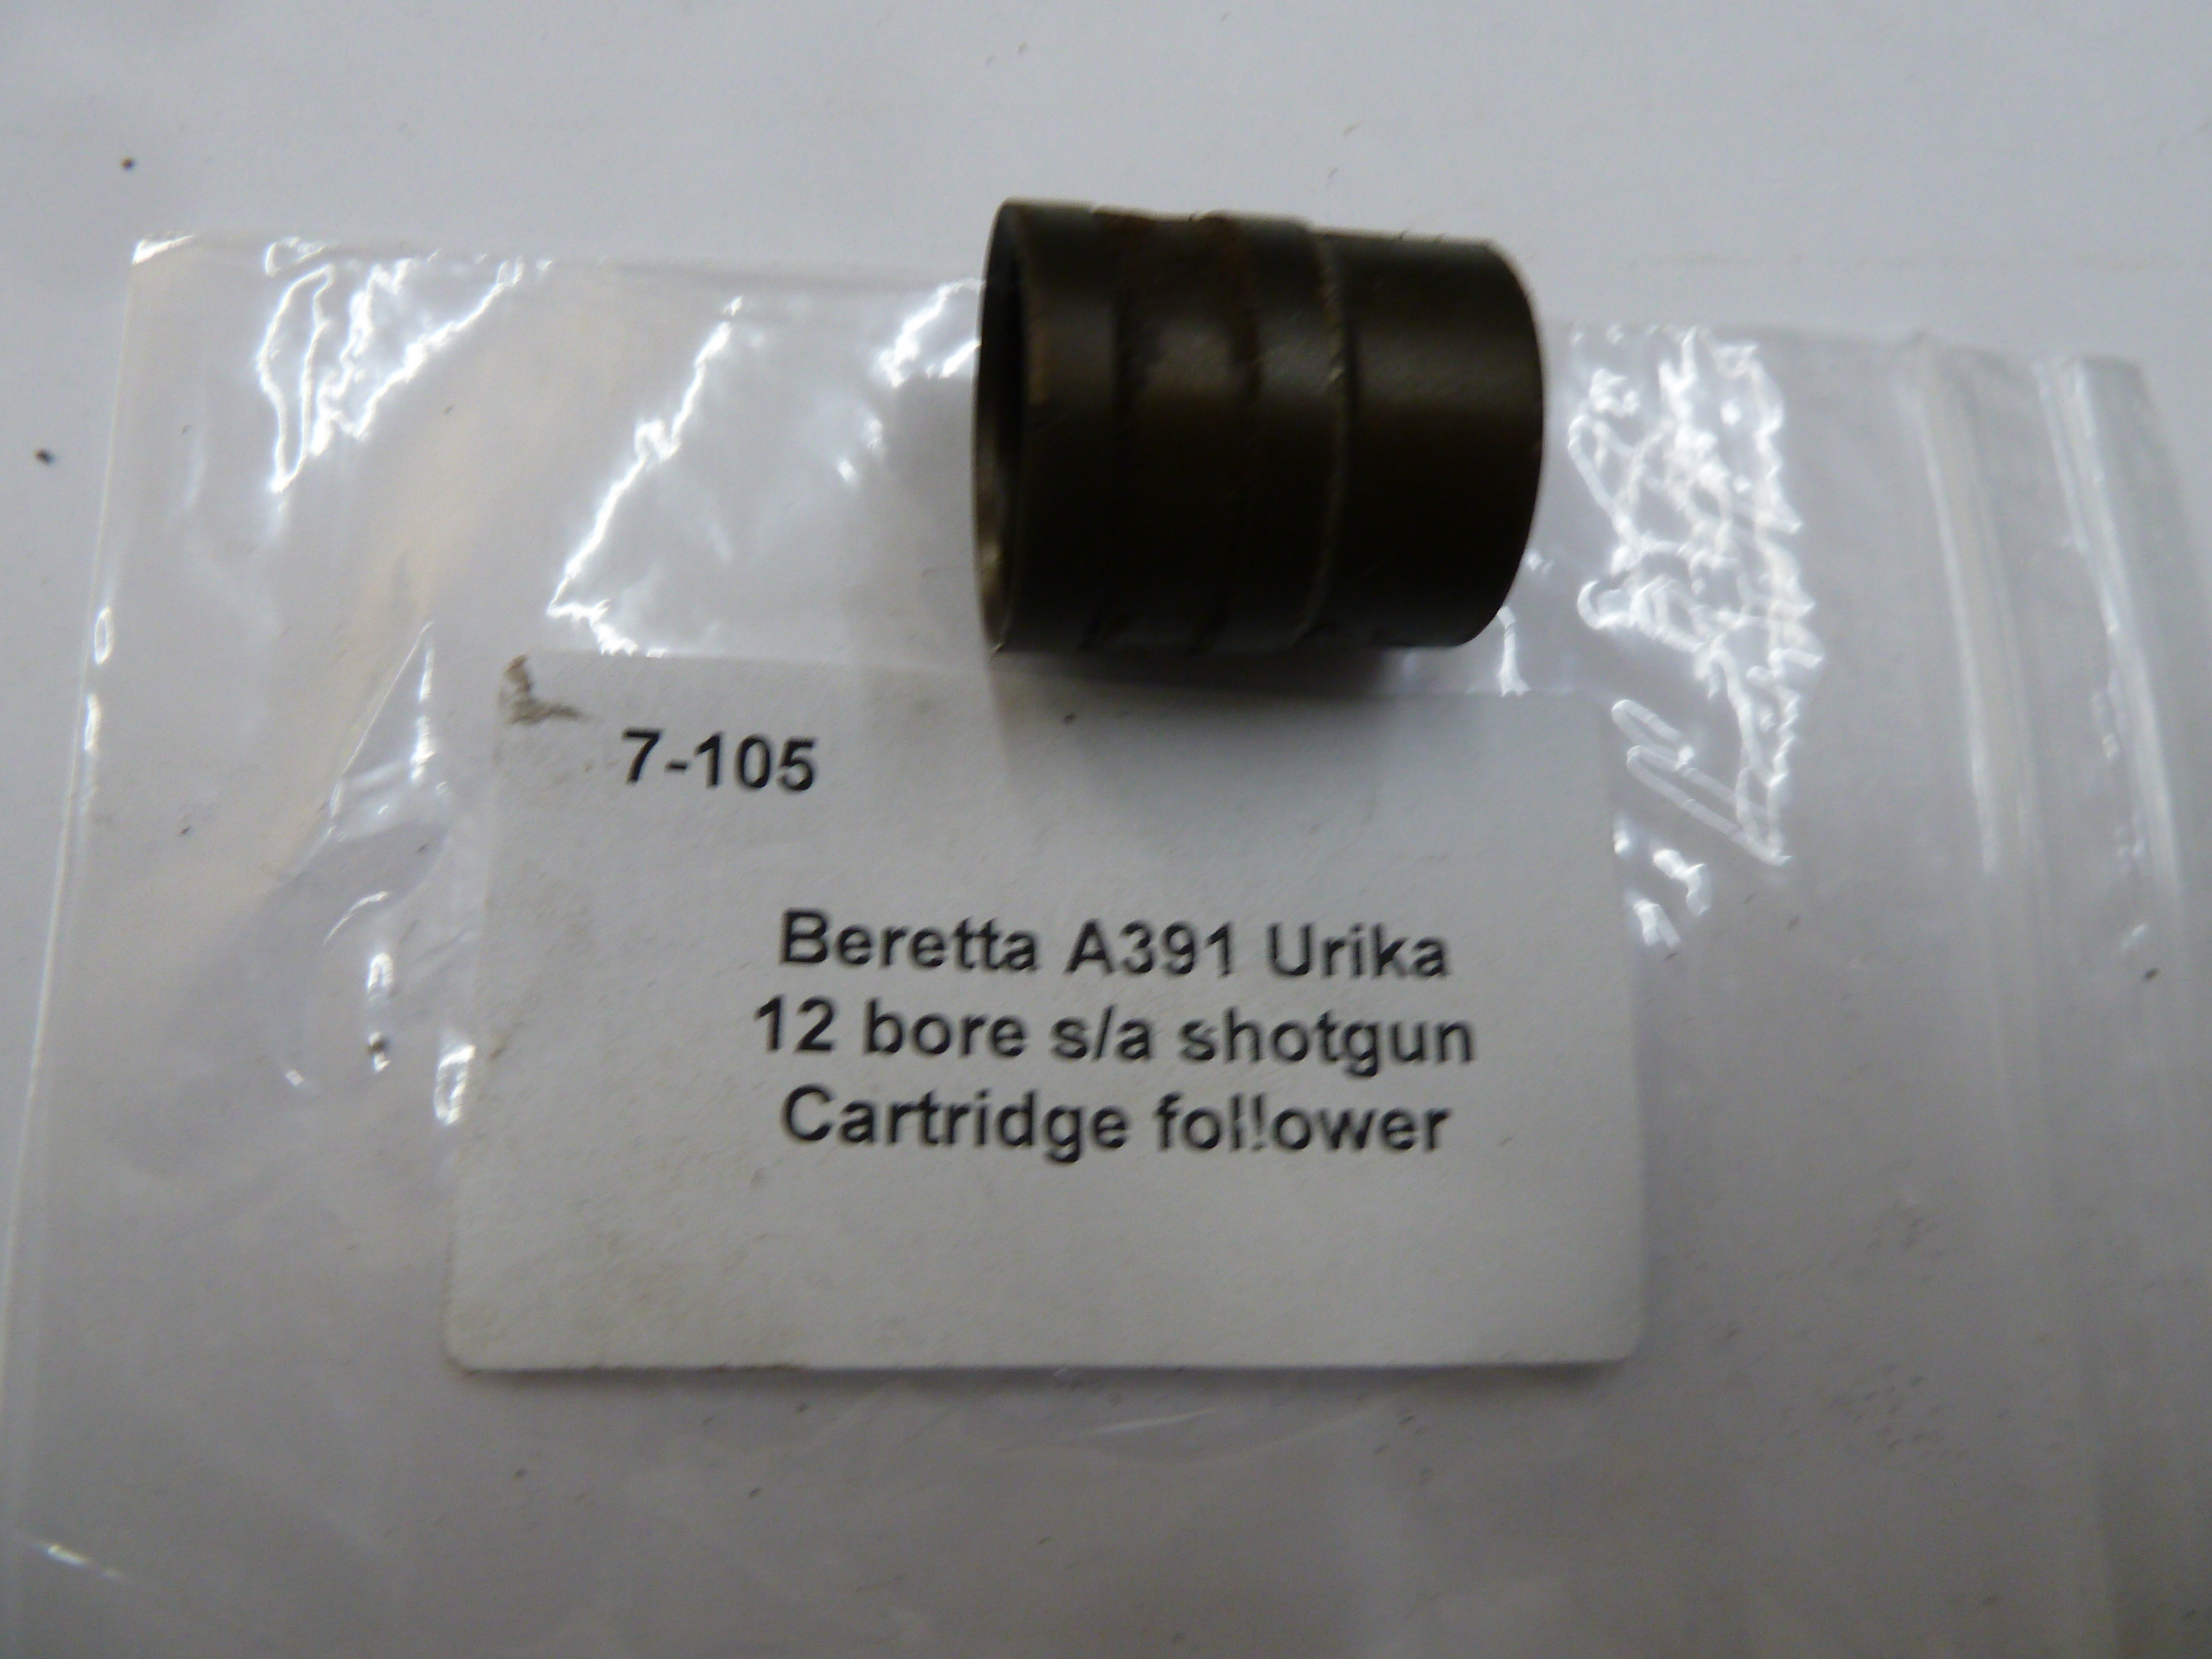 7-106 Beretta A391 urika cartridge follower (3)